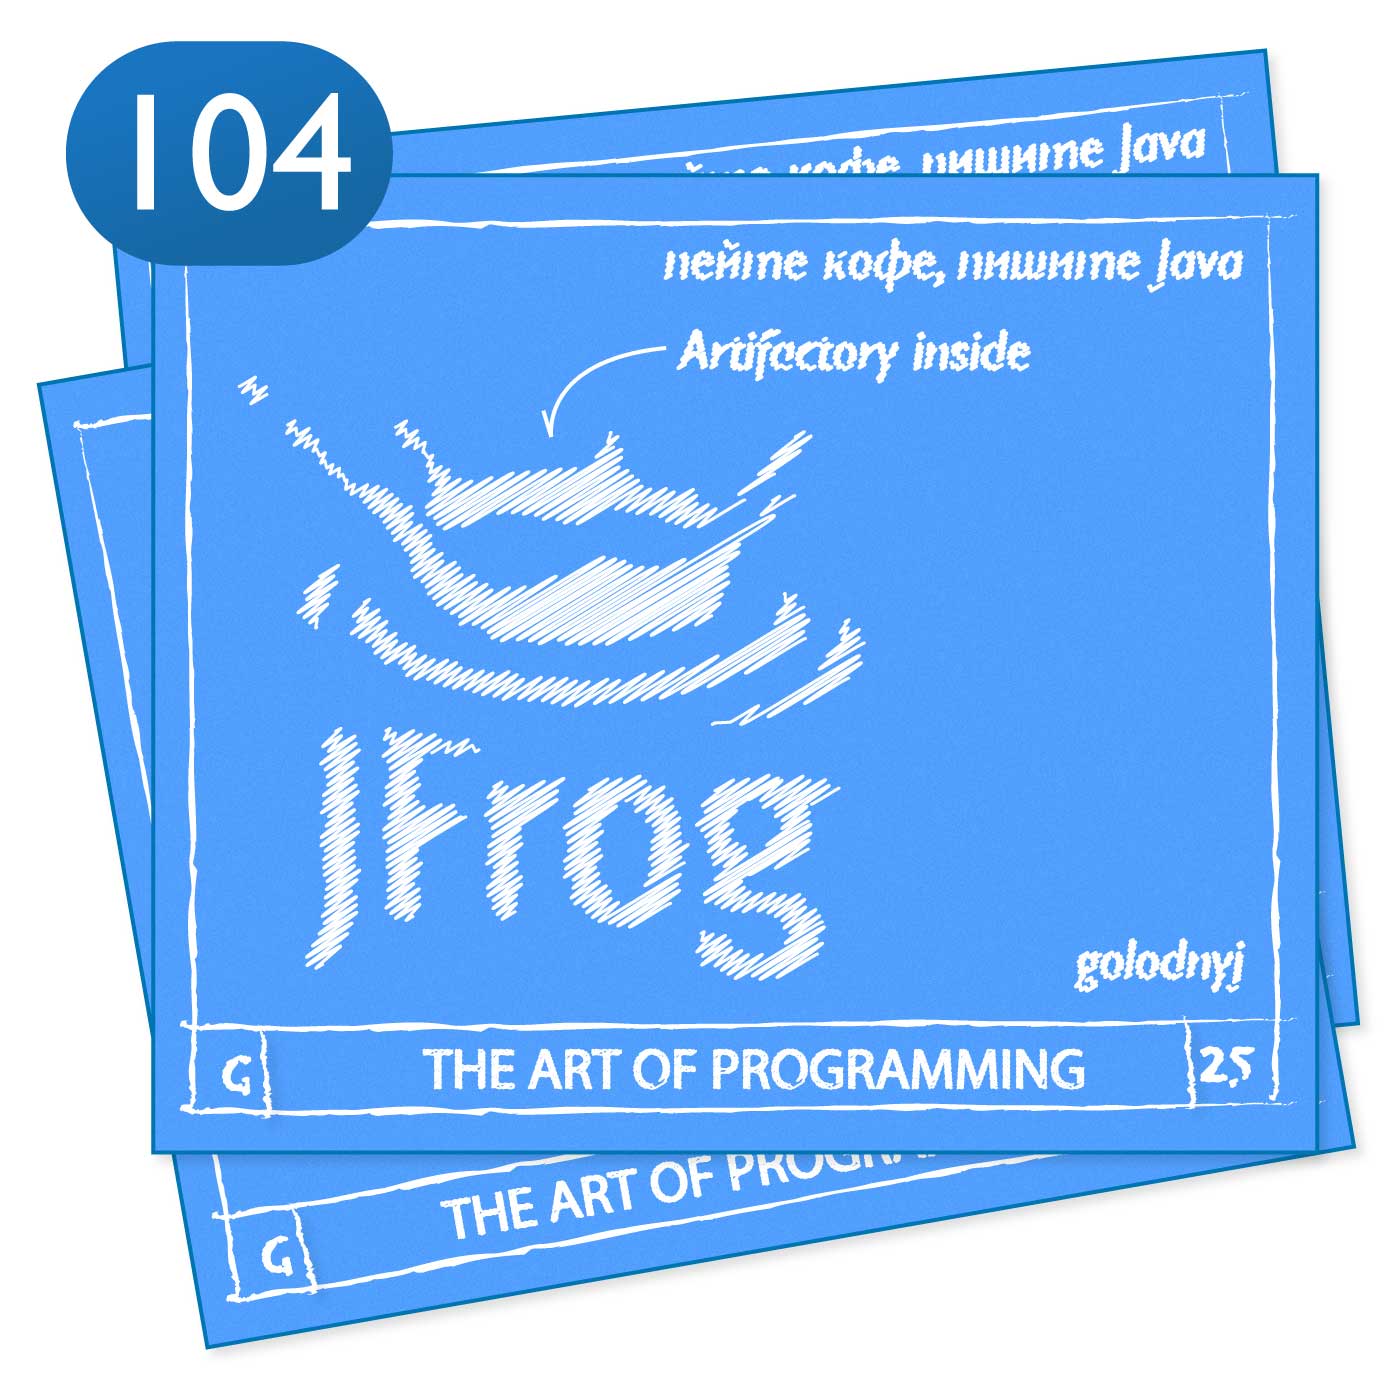 Art of programming. The Art of Programming подкаст. The Art of Programming подкаст лого. Programming Art.